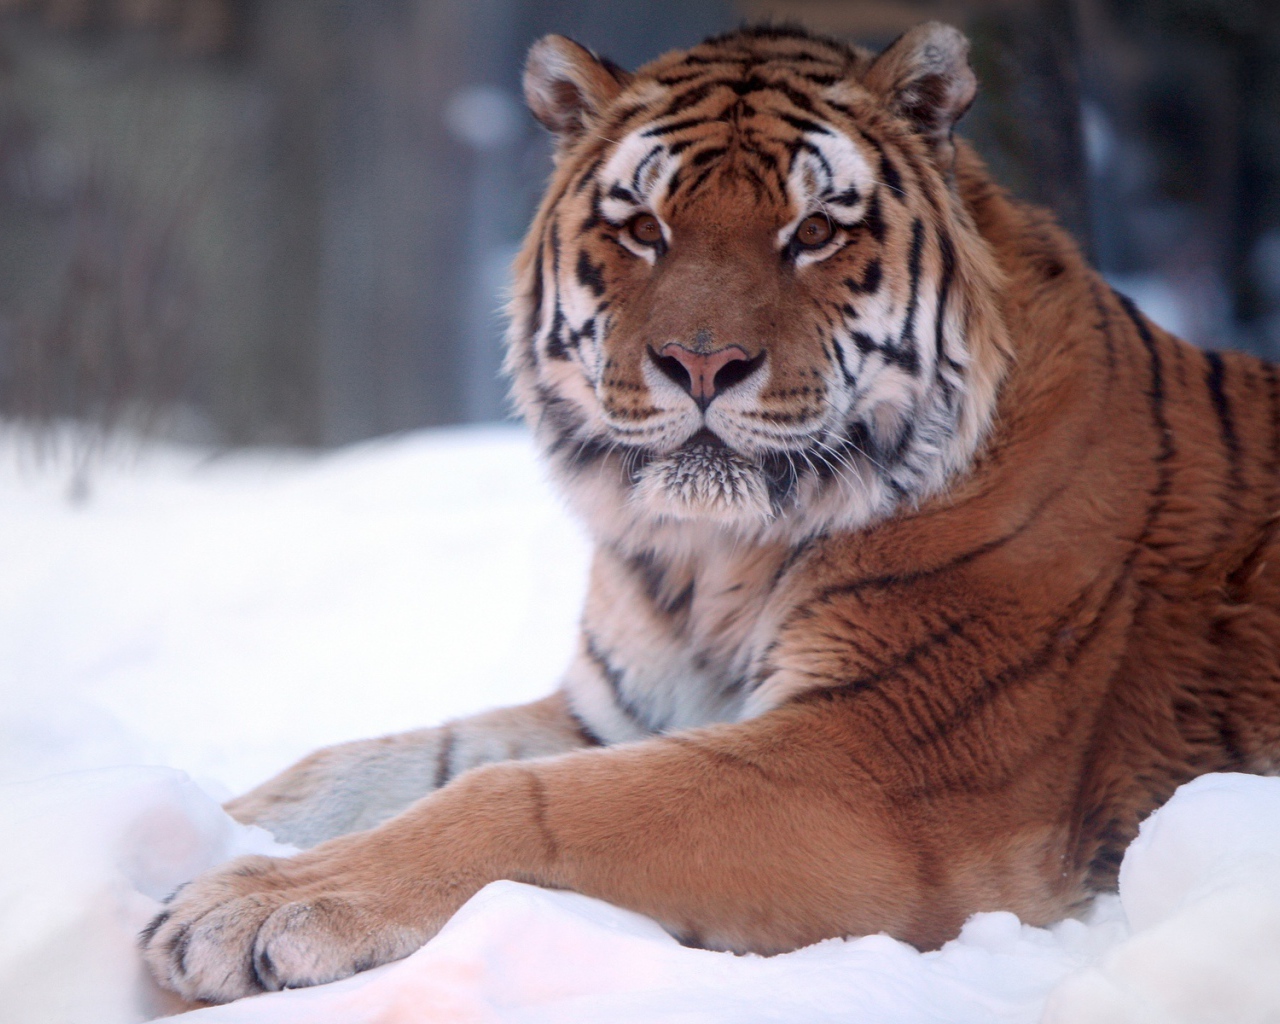 Тигр в снегу